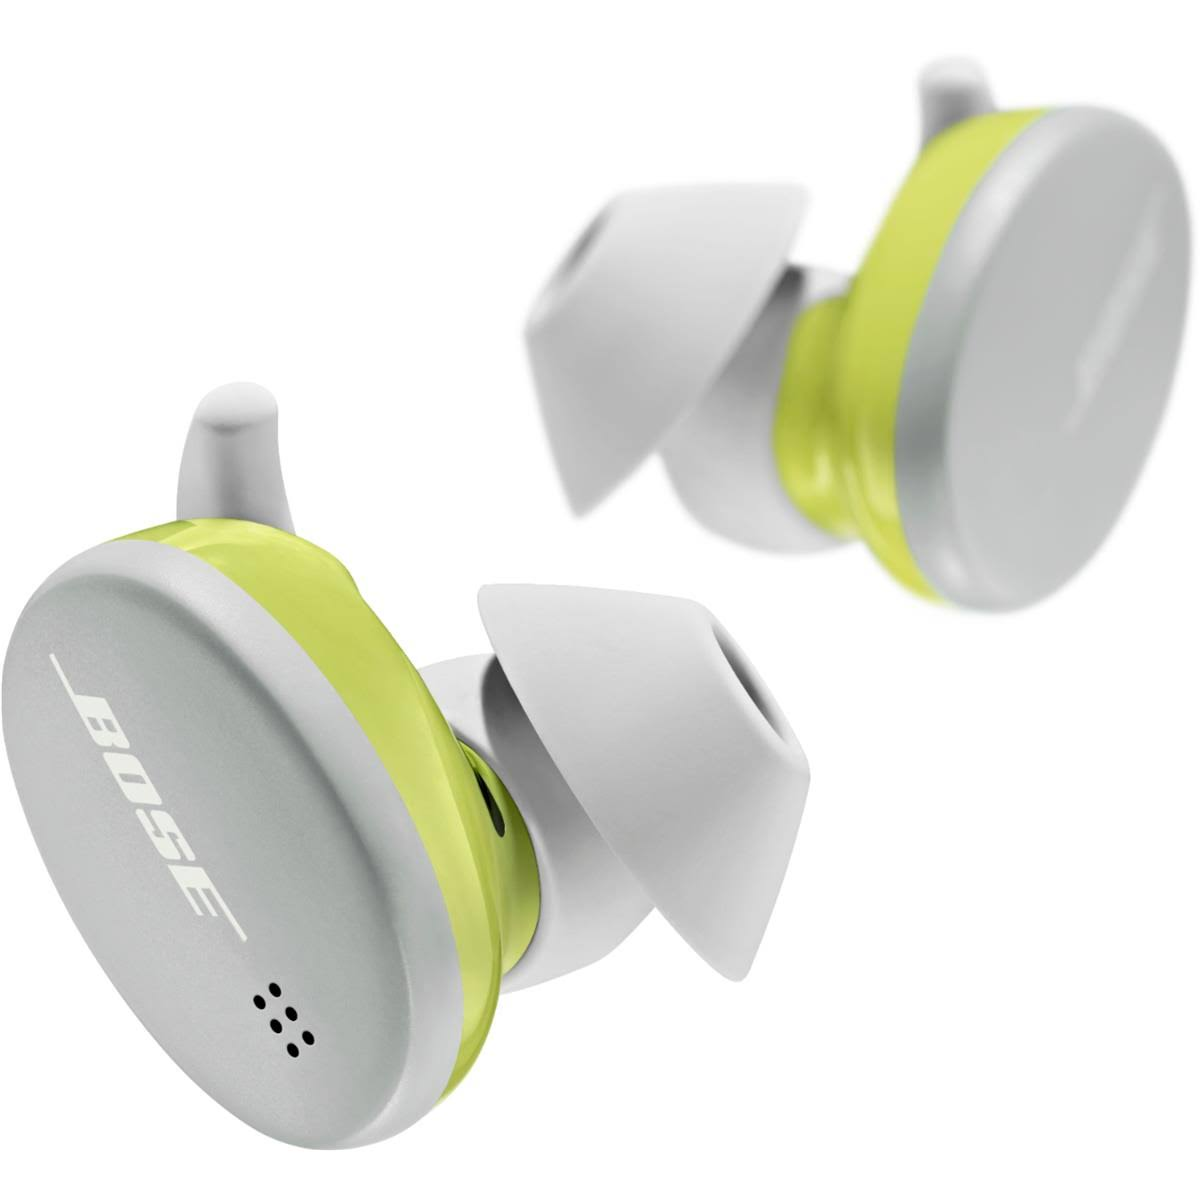 Bose Glacier White Wireless Sport Earbuds